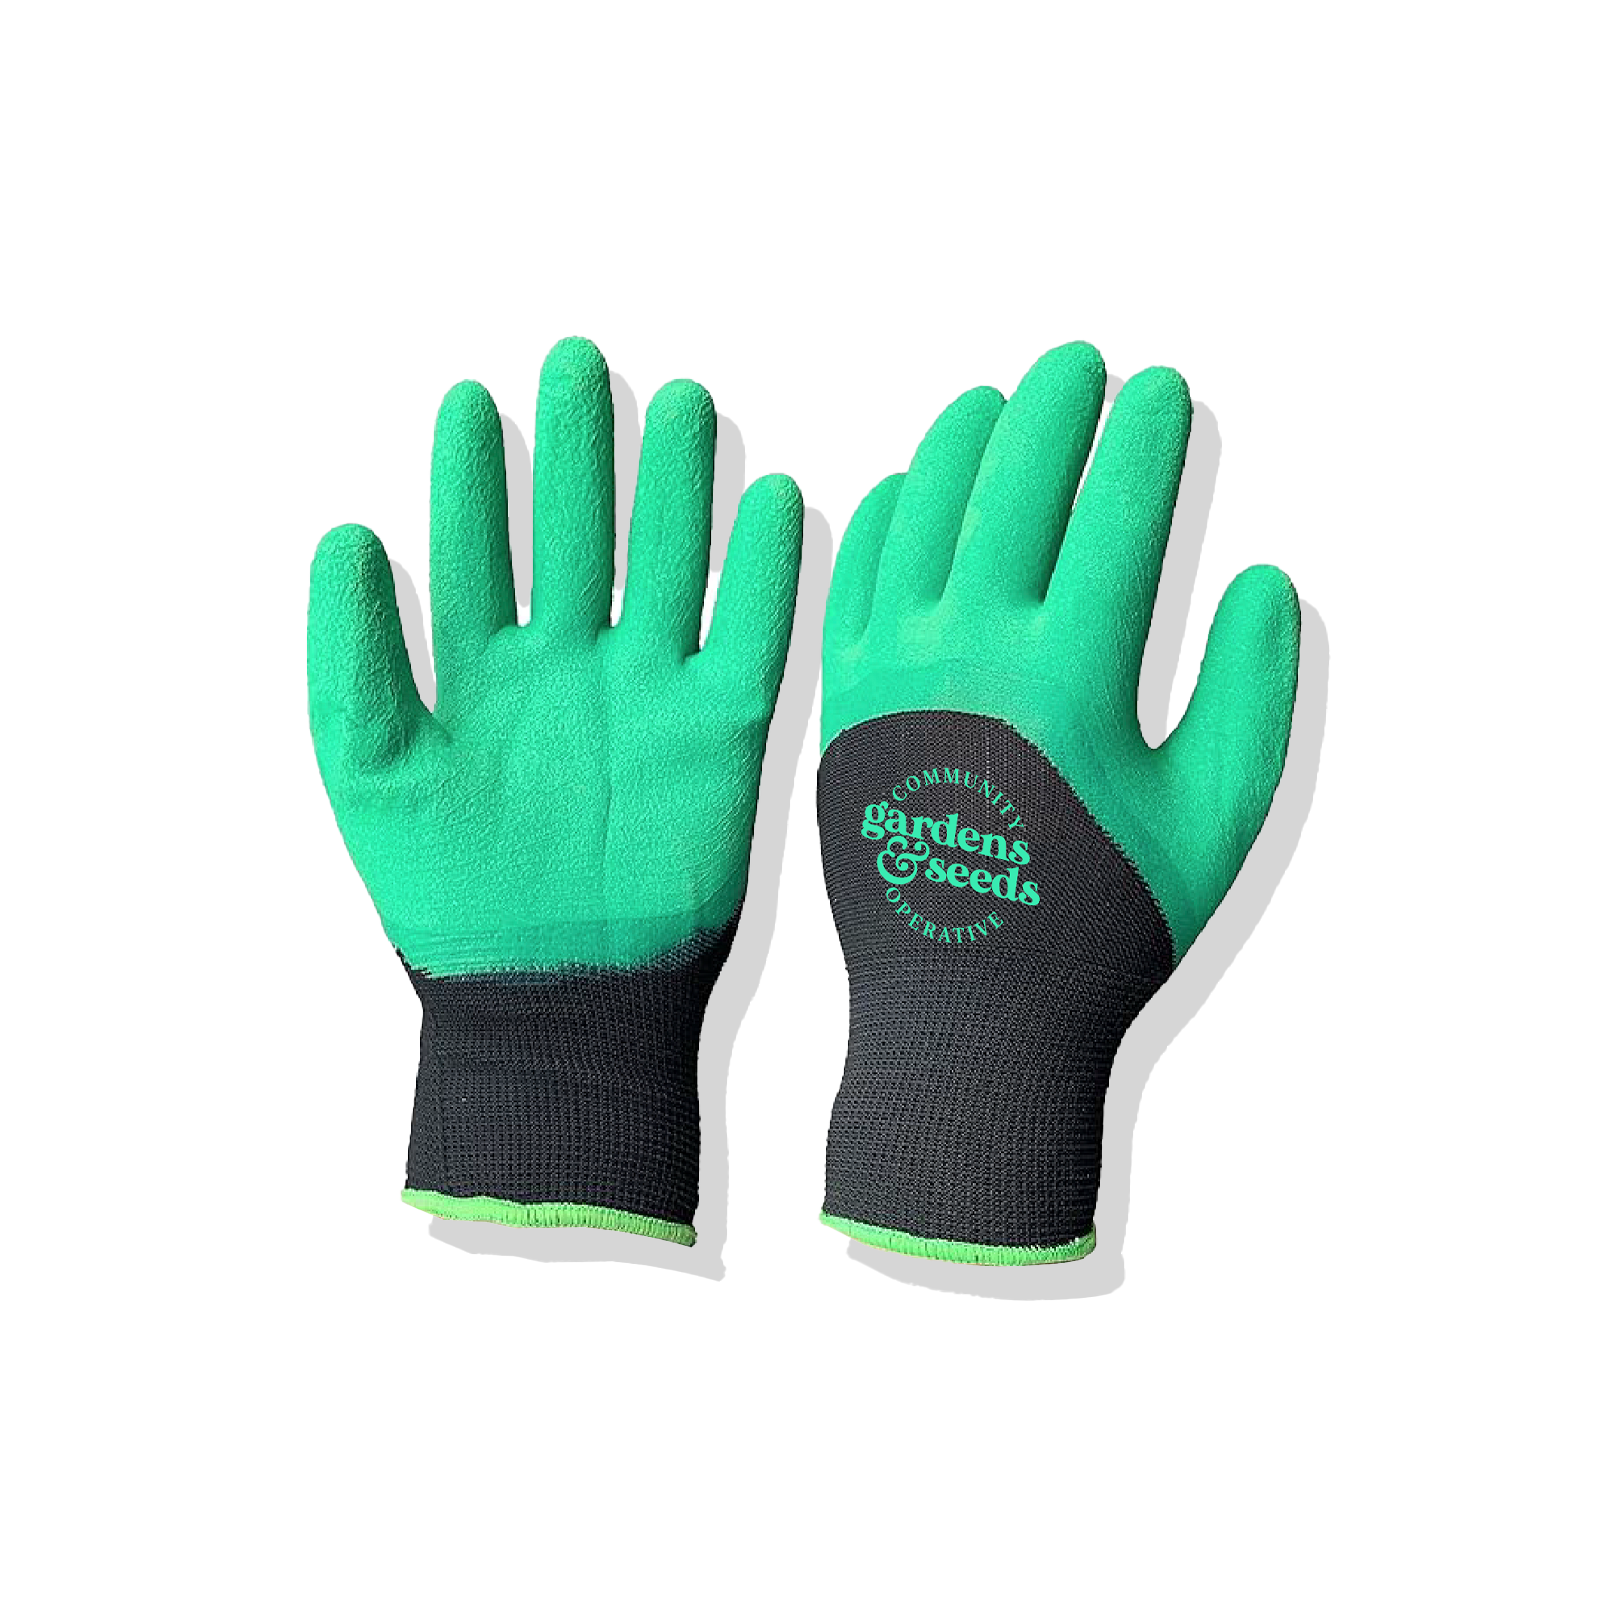 "CO-OP" Gardening Gloves- Green/Black